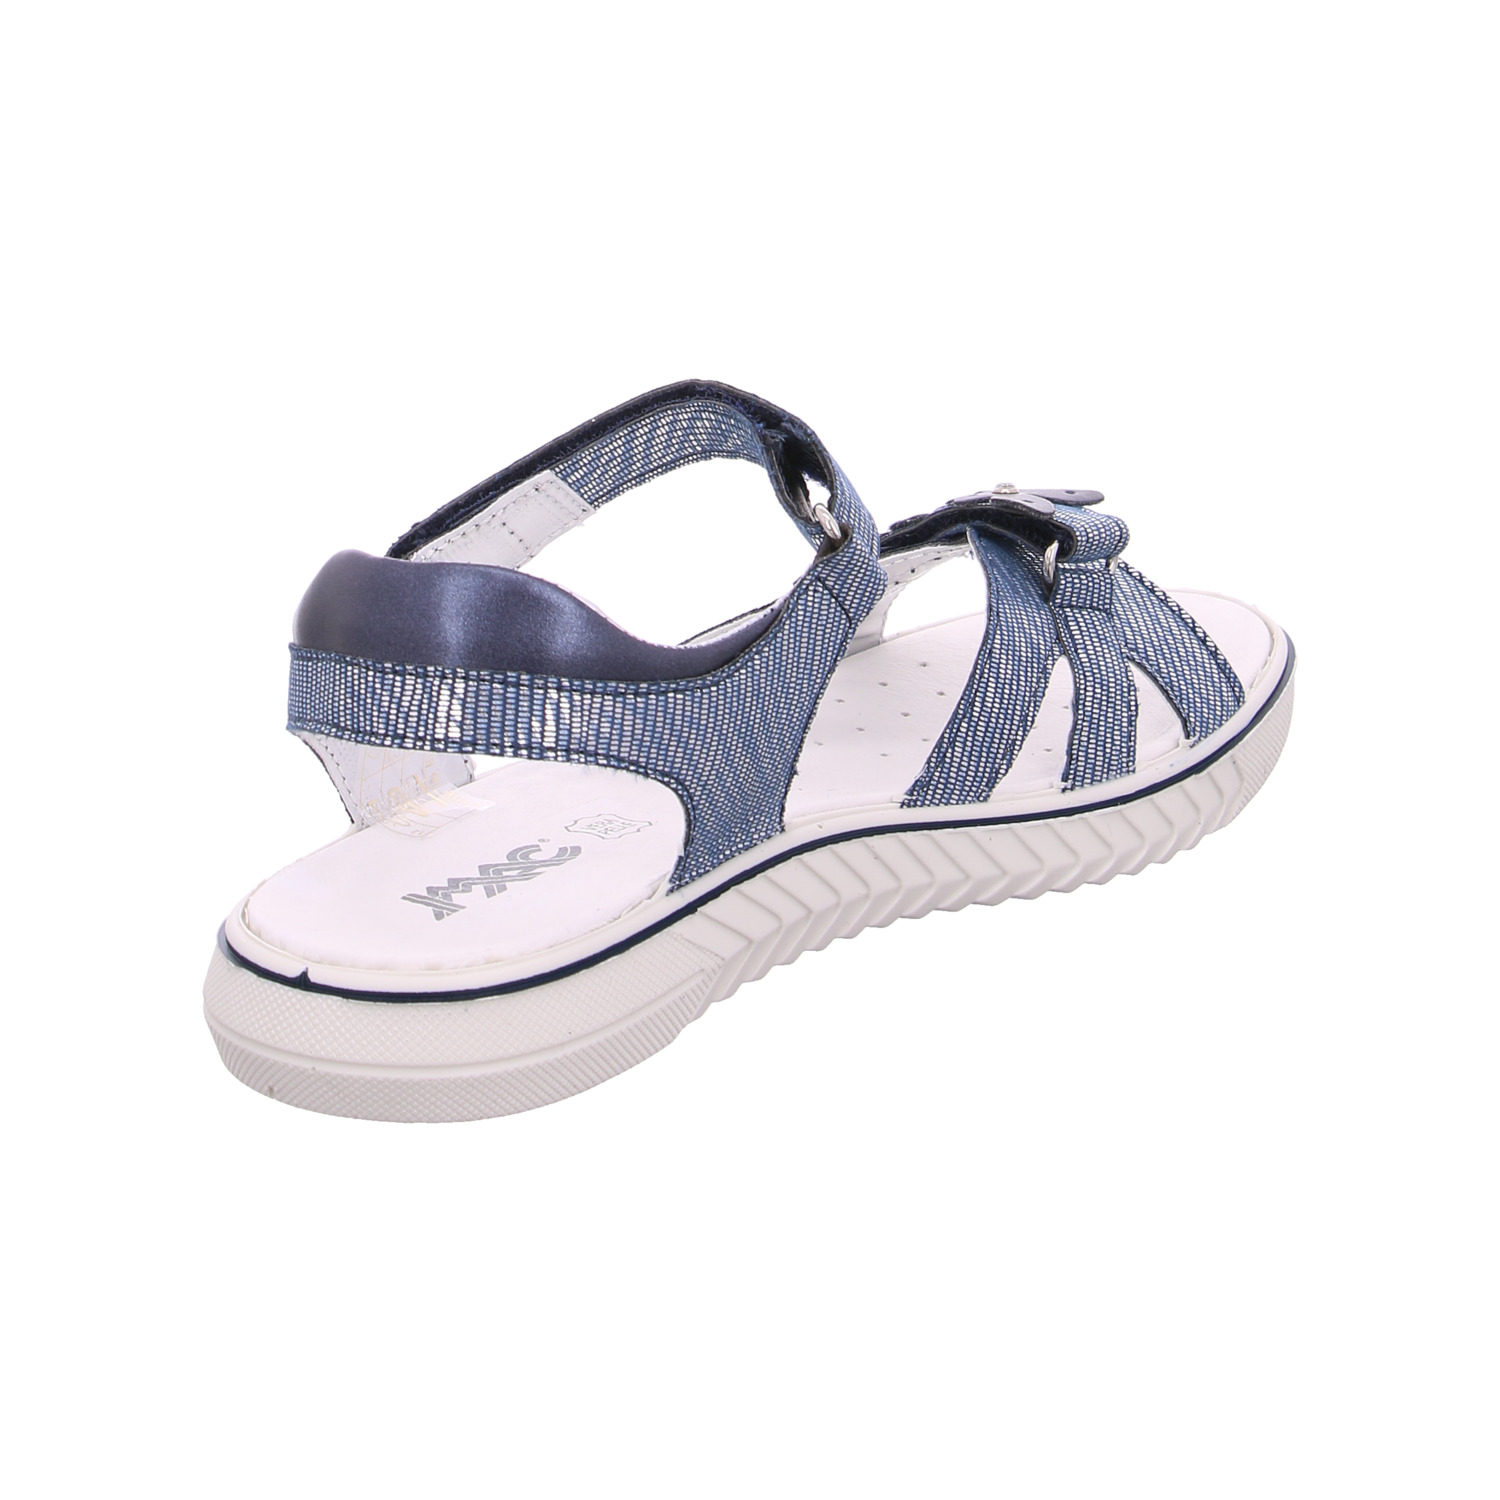 imac-kinder-sandaletten-mädchen-blau-119696-33